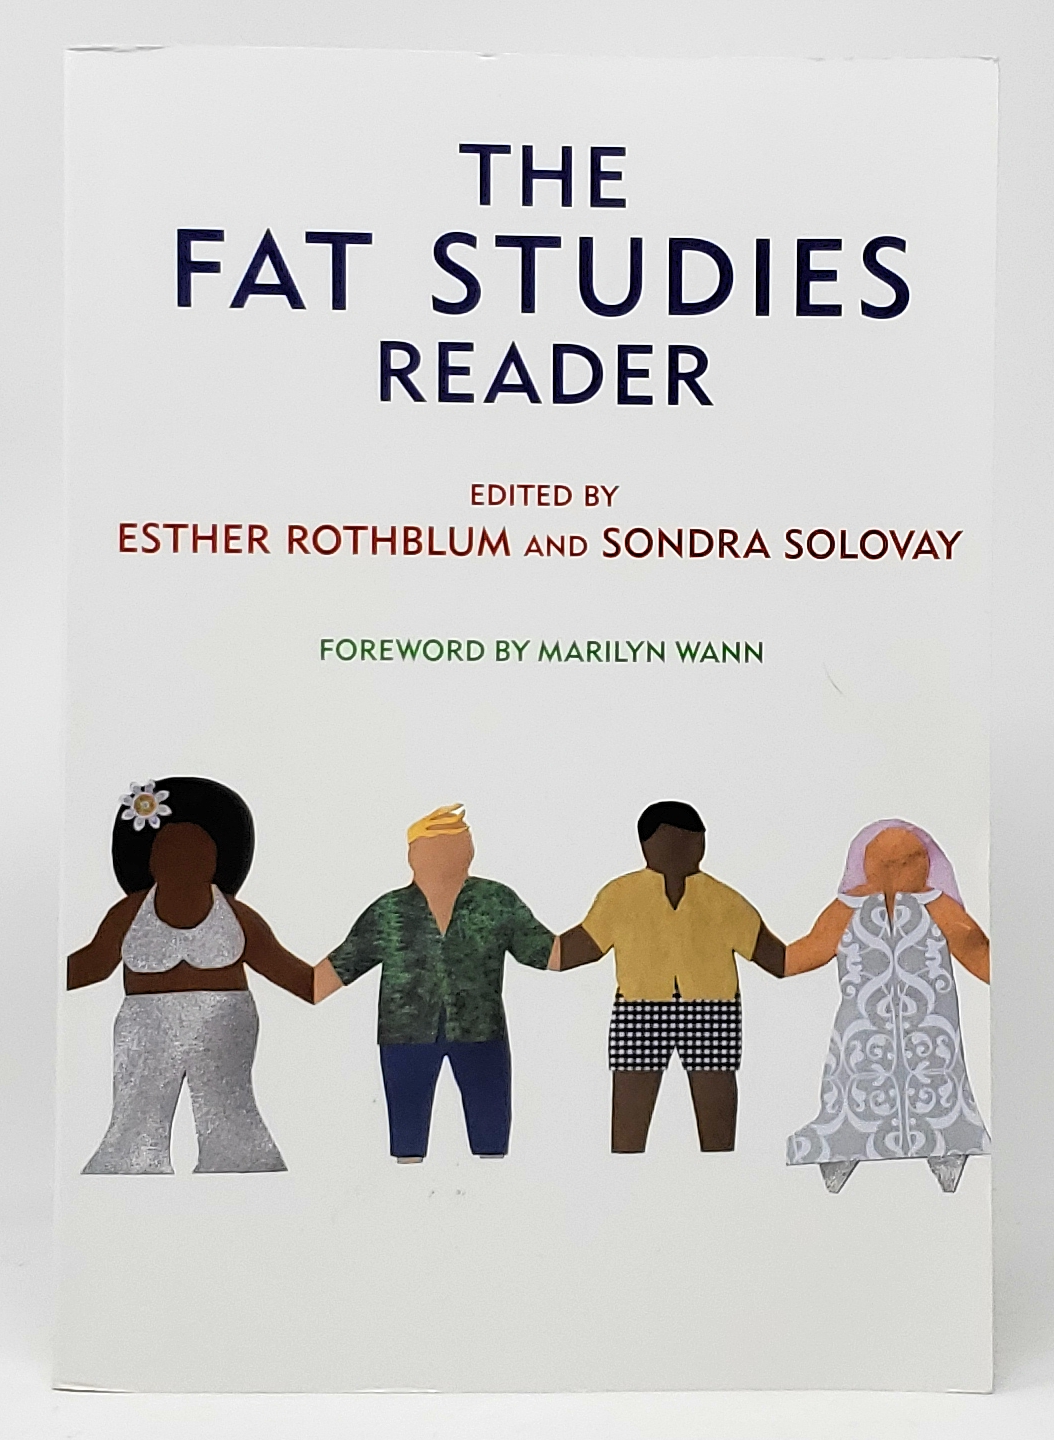 The Fat Studies Reader - Rothblum, Esther (Ed.); Solovay, Sondra (Ed.); Wann, Marilyn (Foreword)